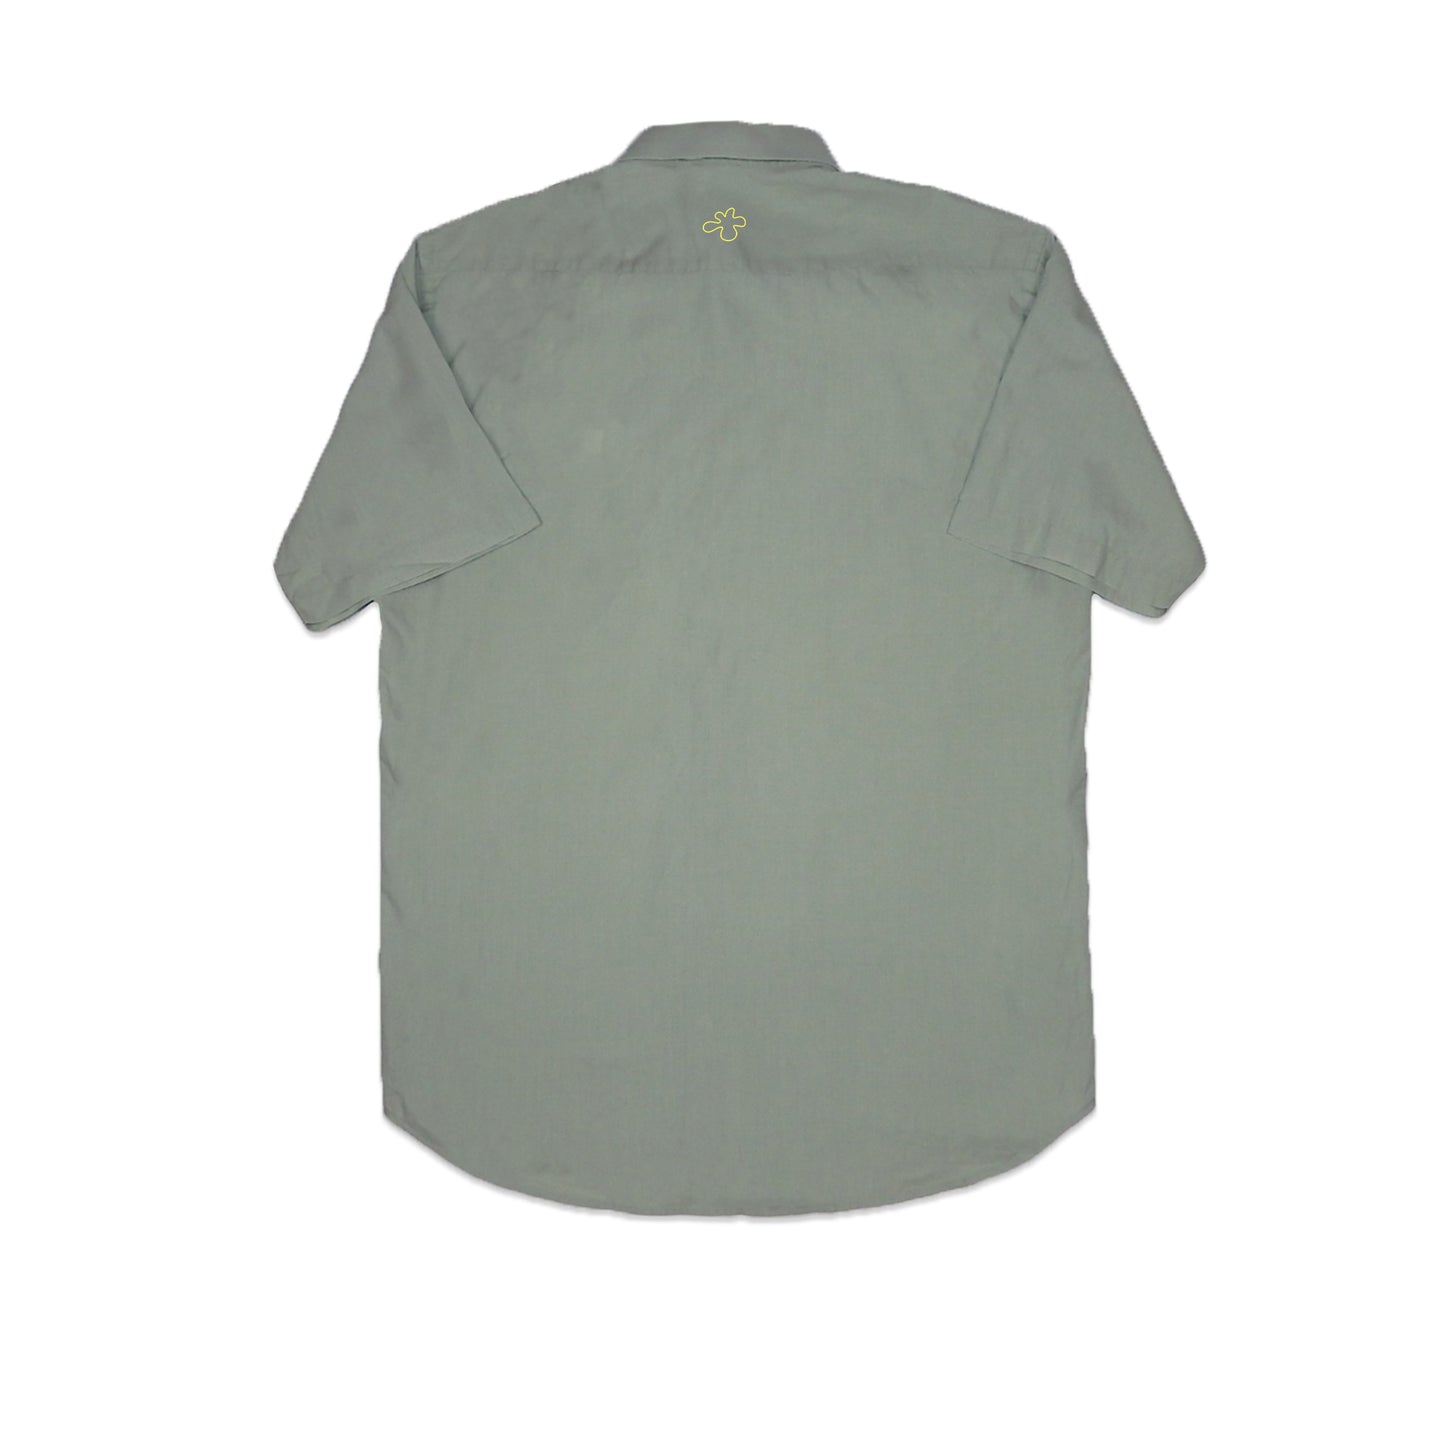 Custard Reclaimed Teal Shirt | Size Medium